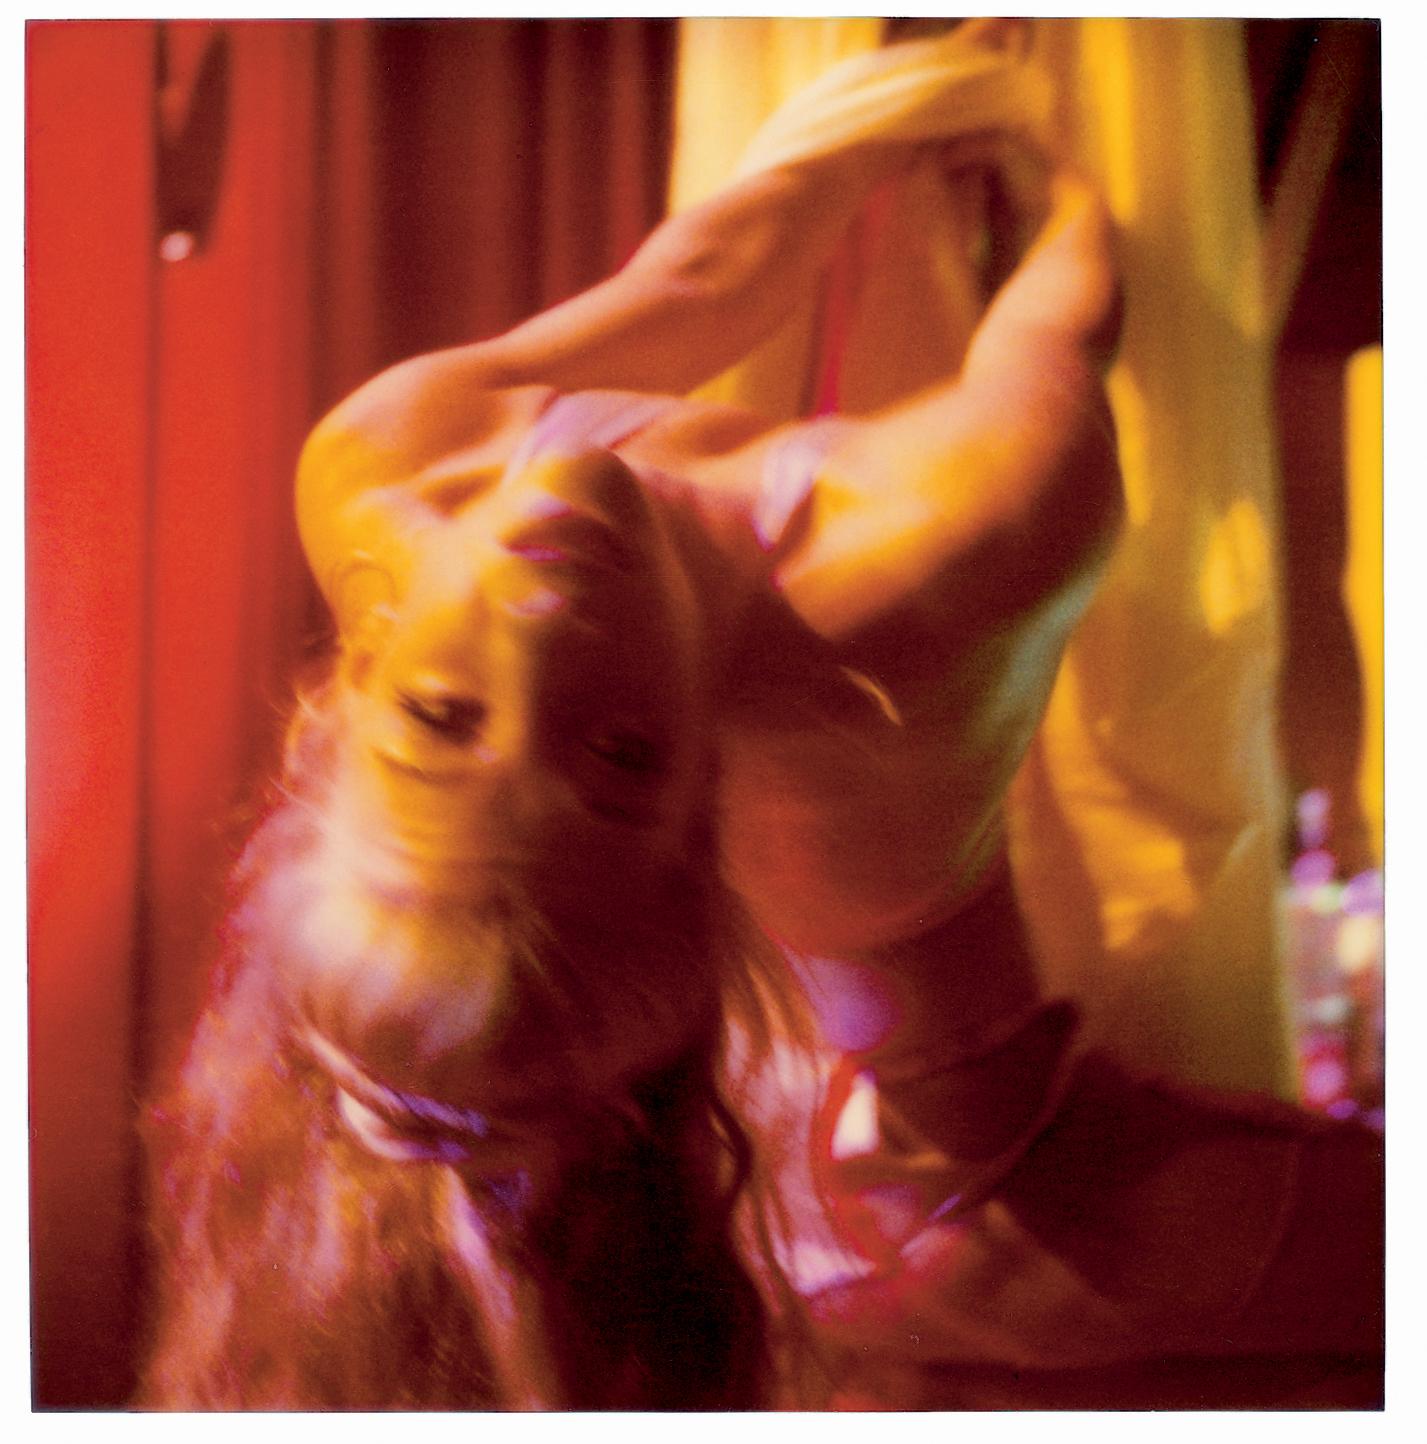 Stefanie Schneider Color Photograph - The Dancer V (Stay) - the movie, expired Polaroid, analog hand made